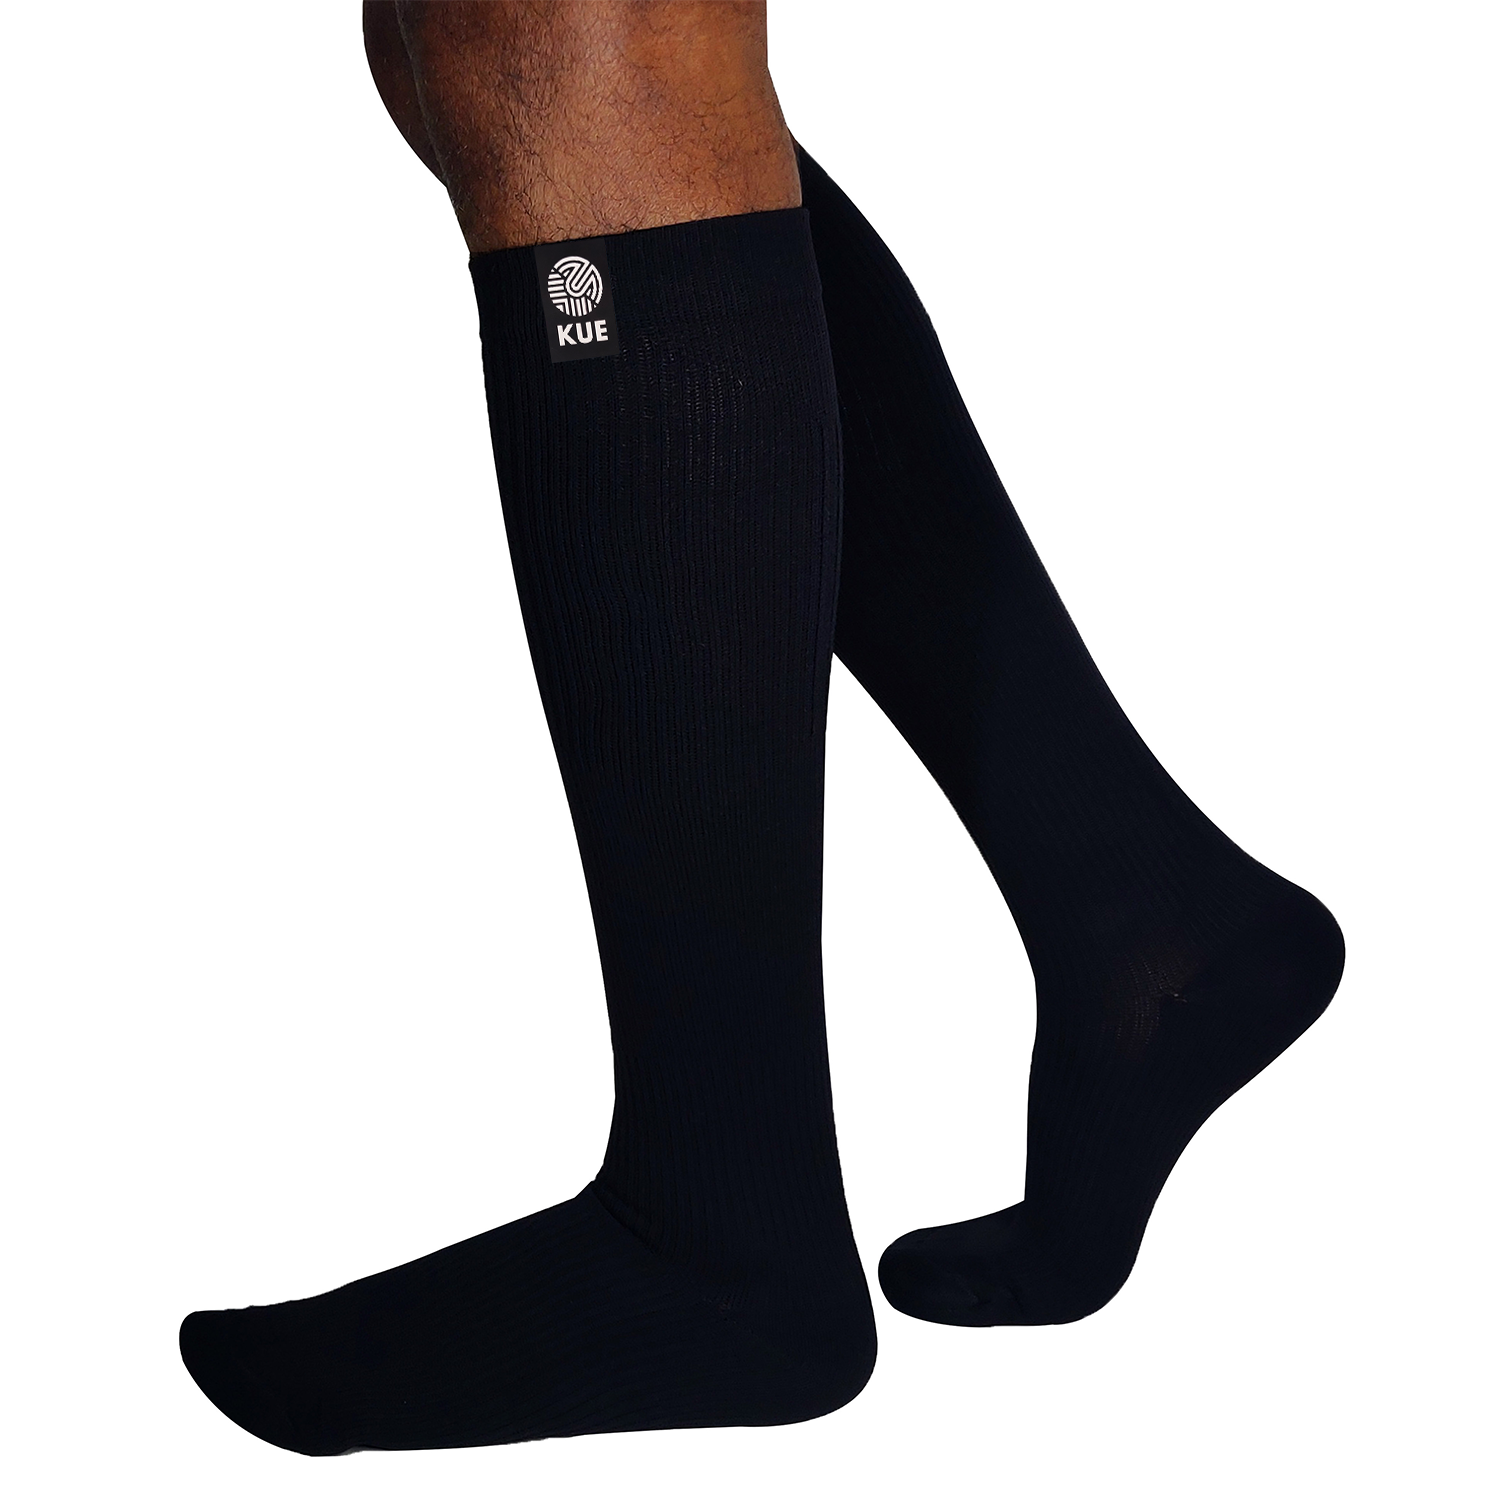 Black Graduated Compression Knee Length Socks (18-21mmHg)